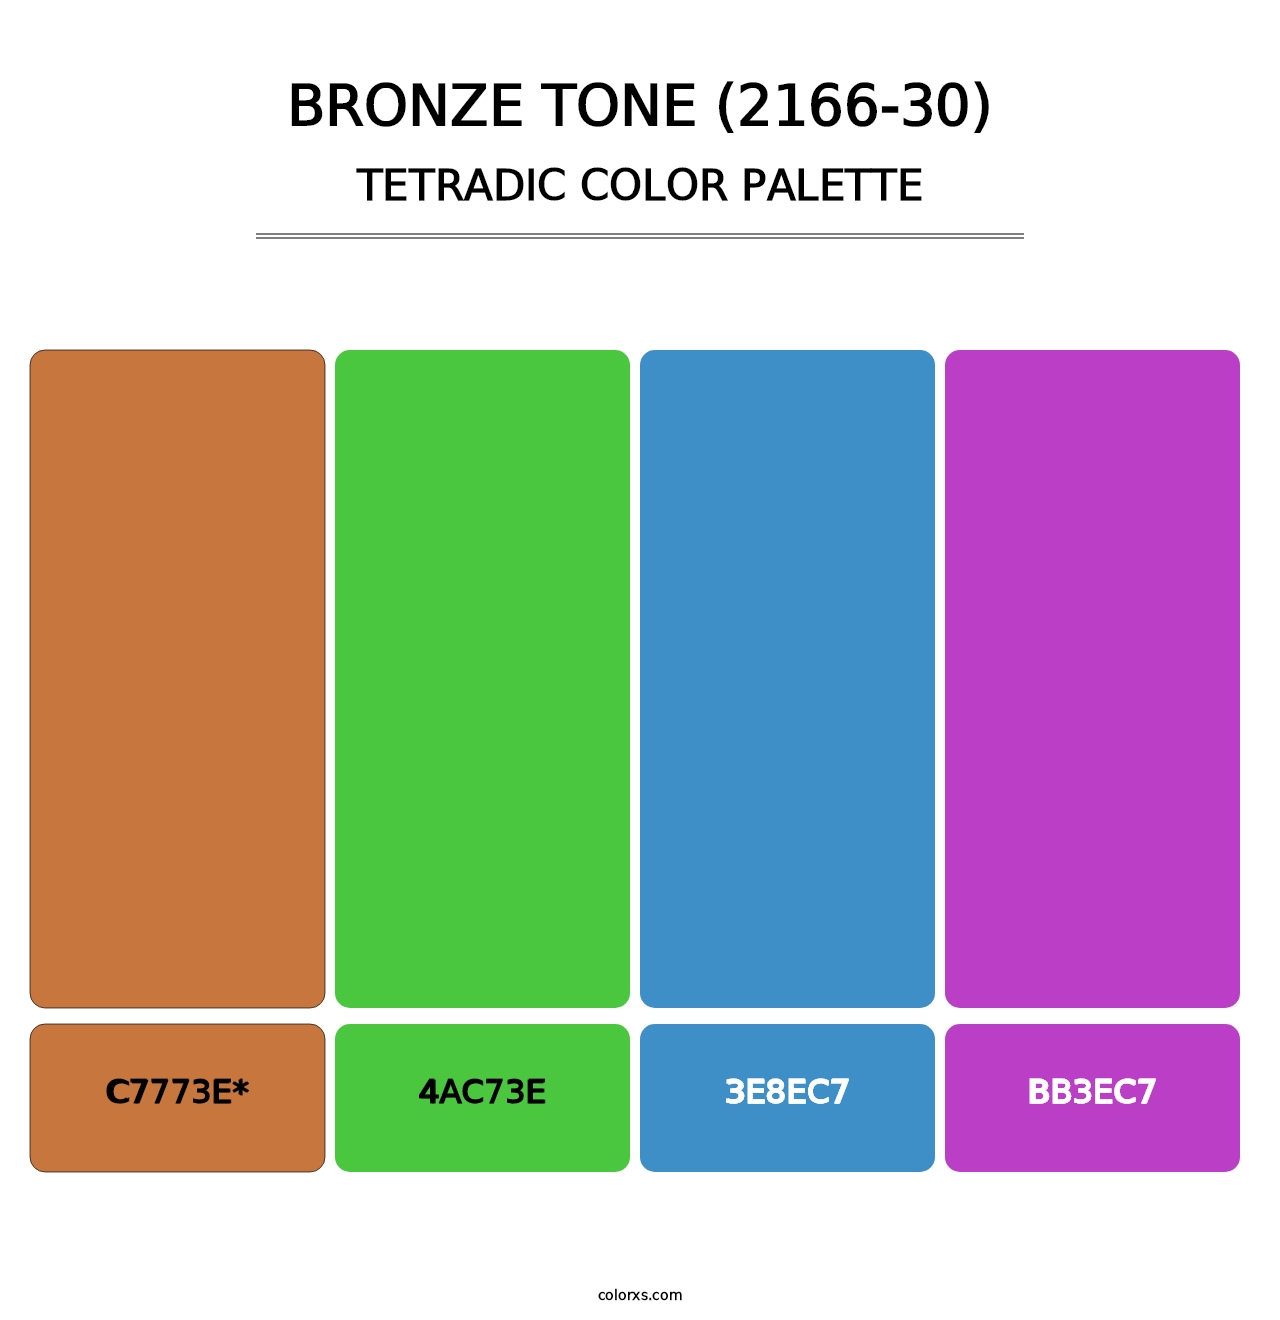 Bronze Tone (2166-30) - Tetradic Color Palette